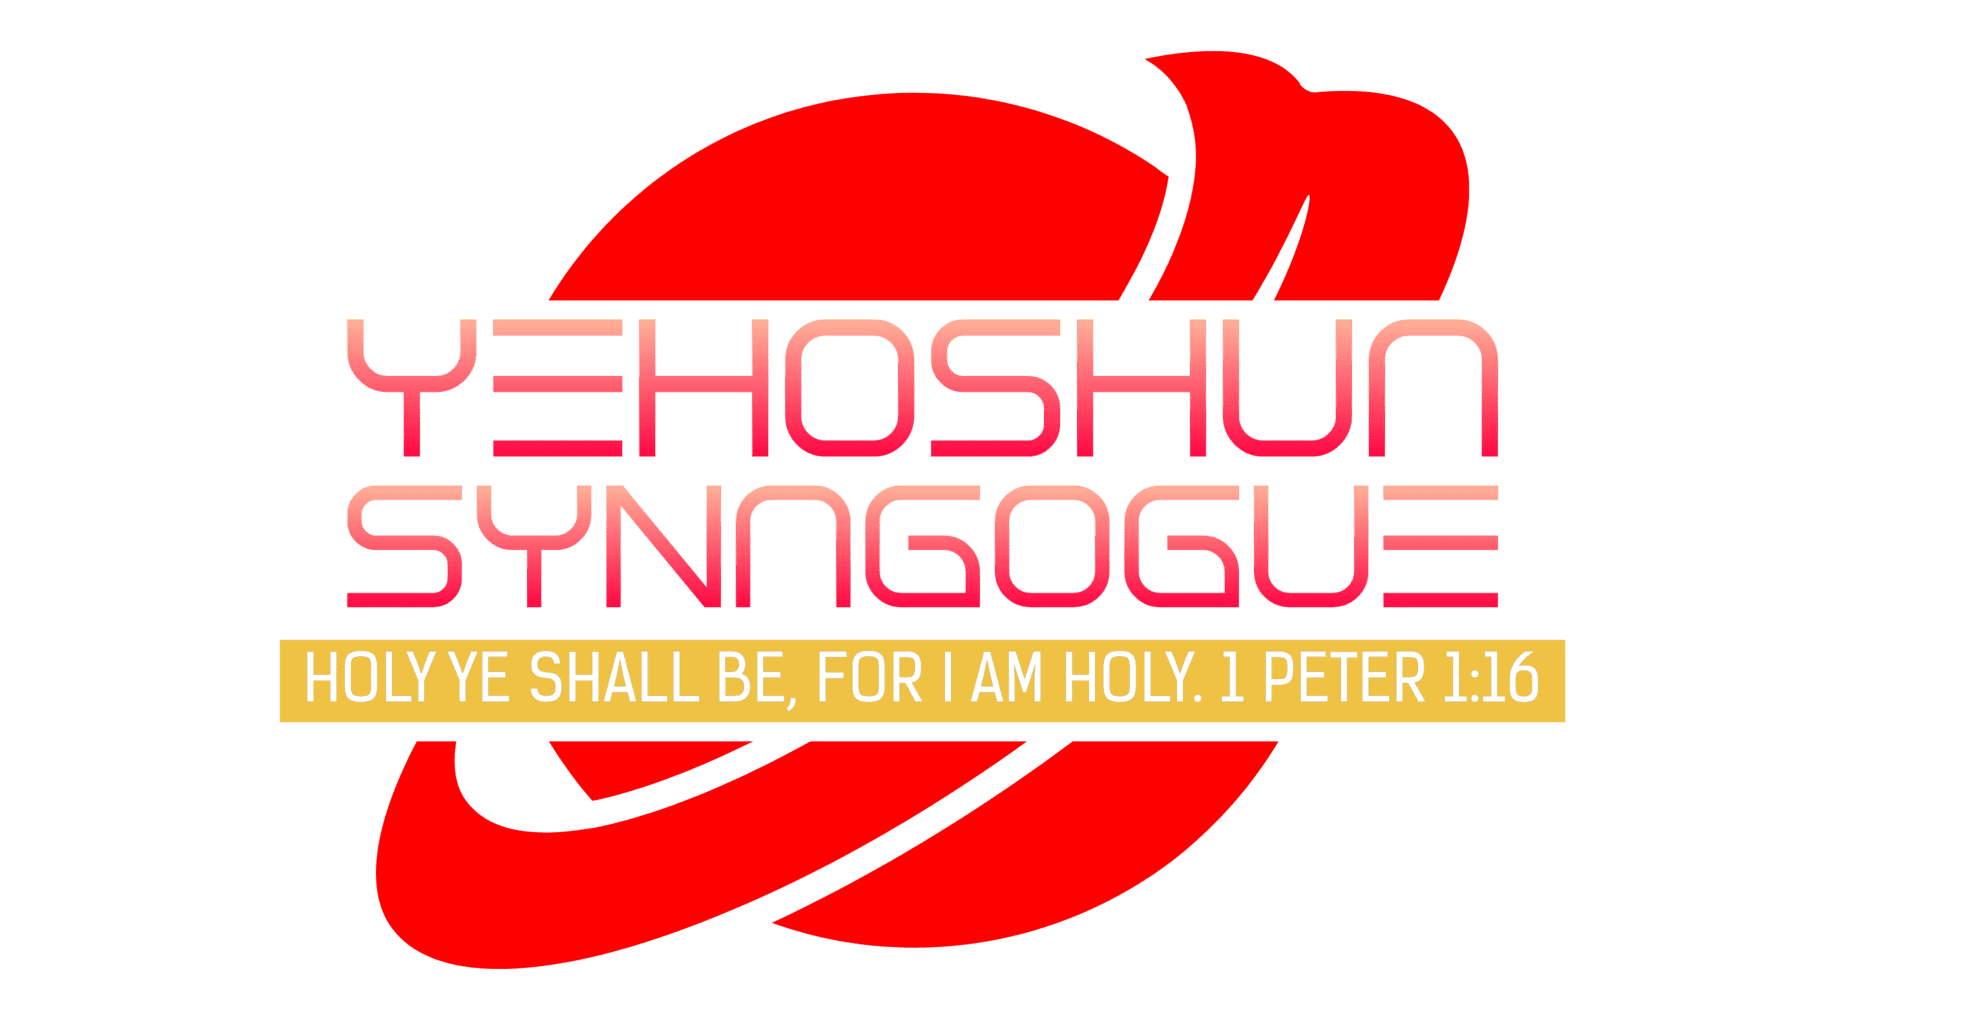 LOGO YEHOSHUA SYNAGOGUE